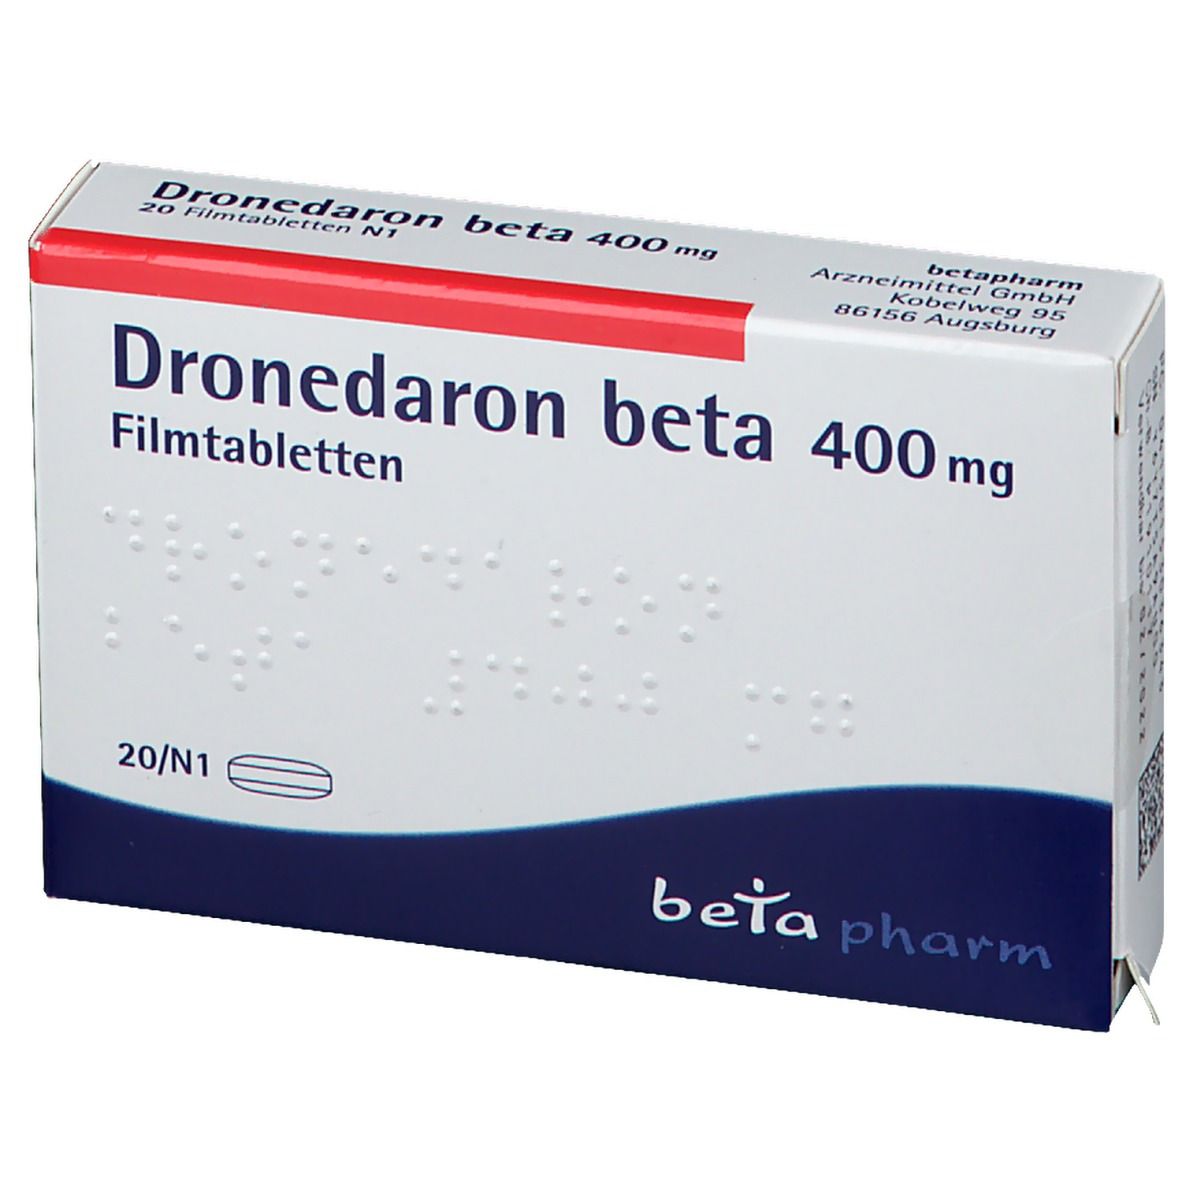 Dronedaron beta 400 mg